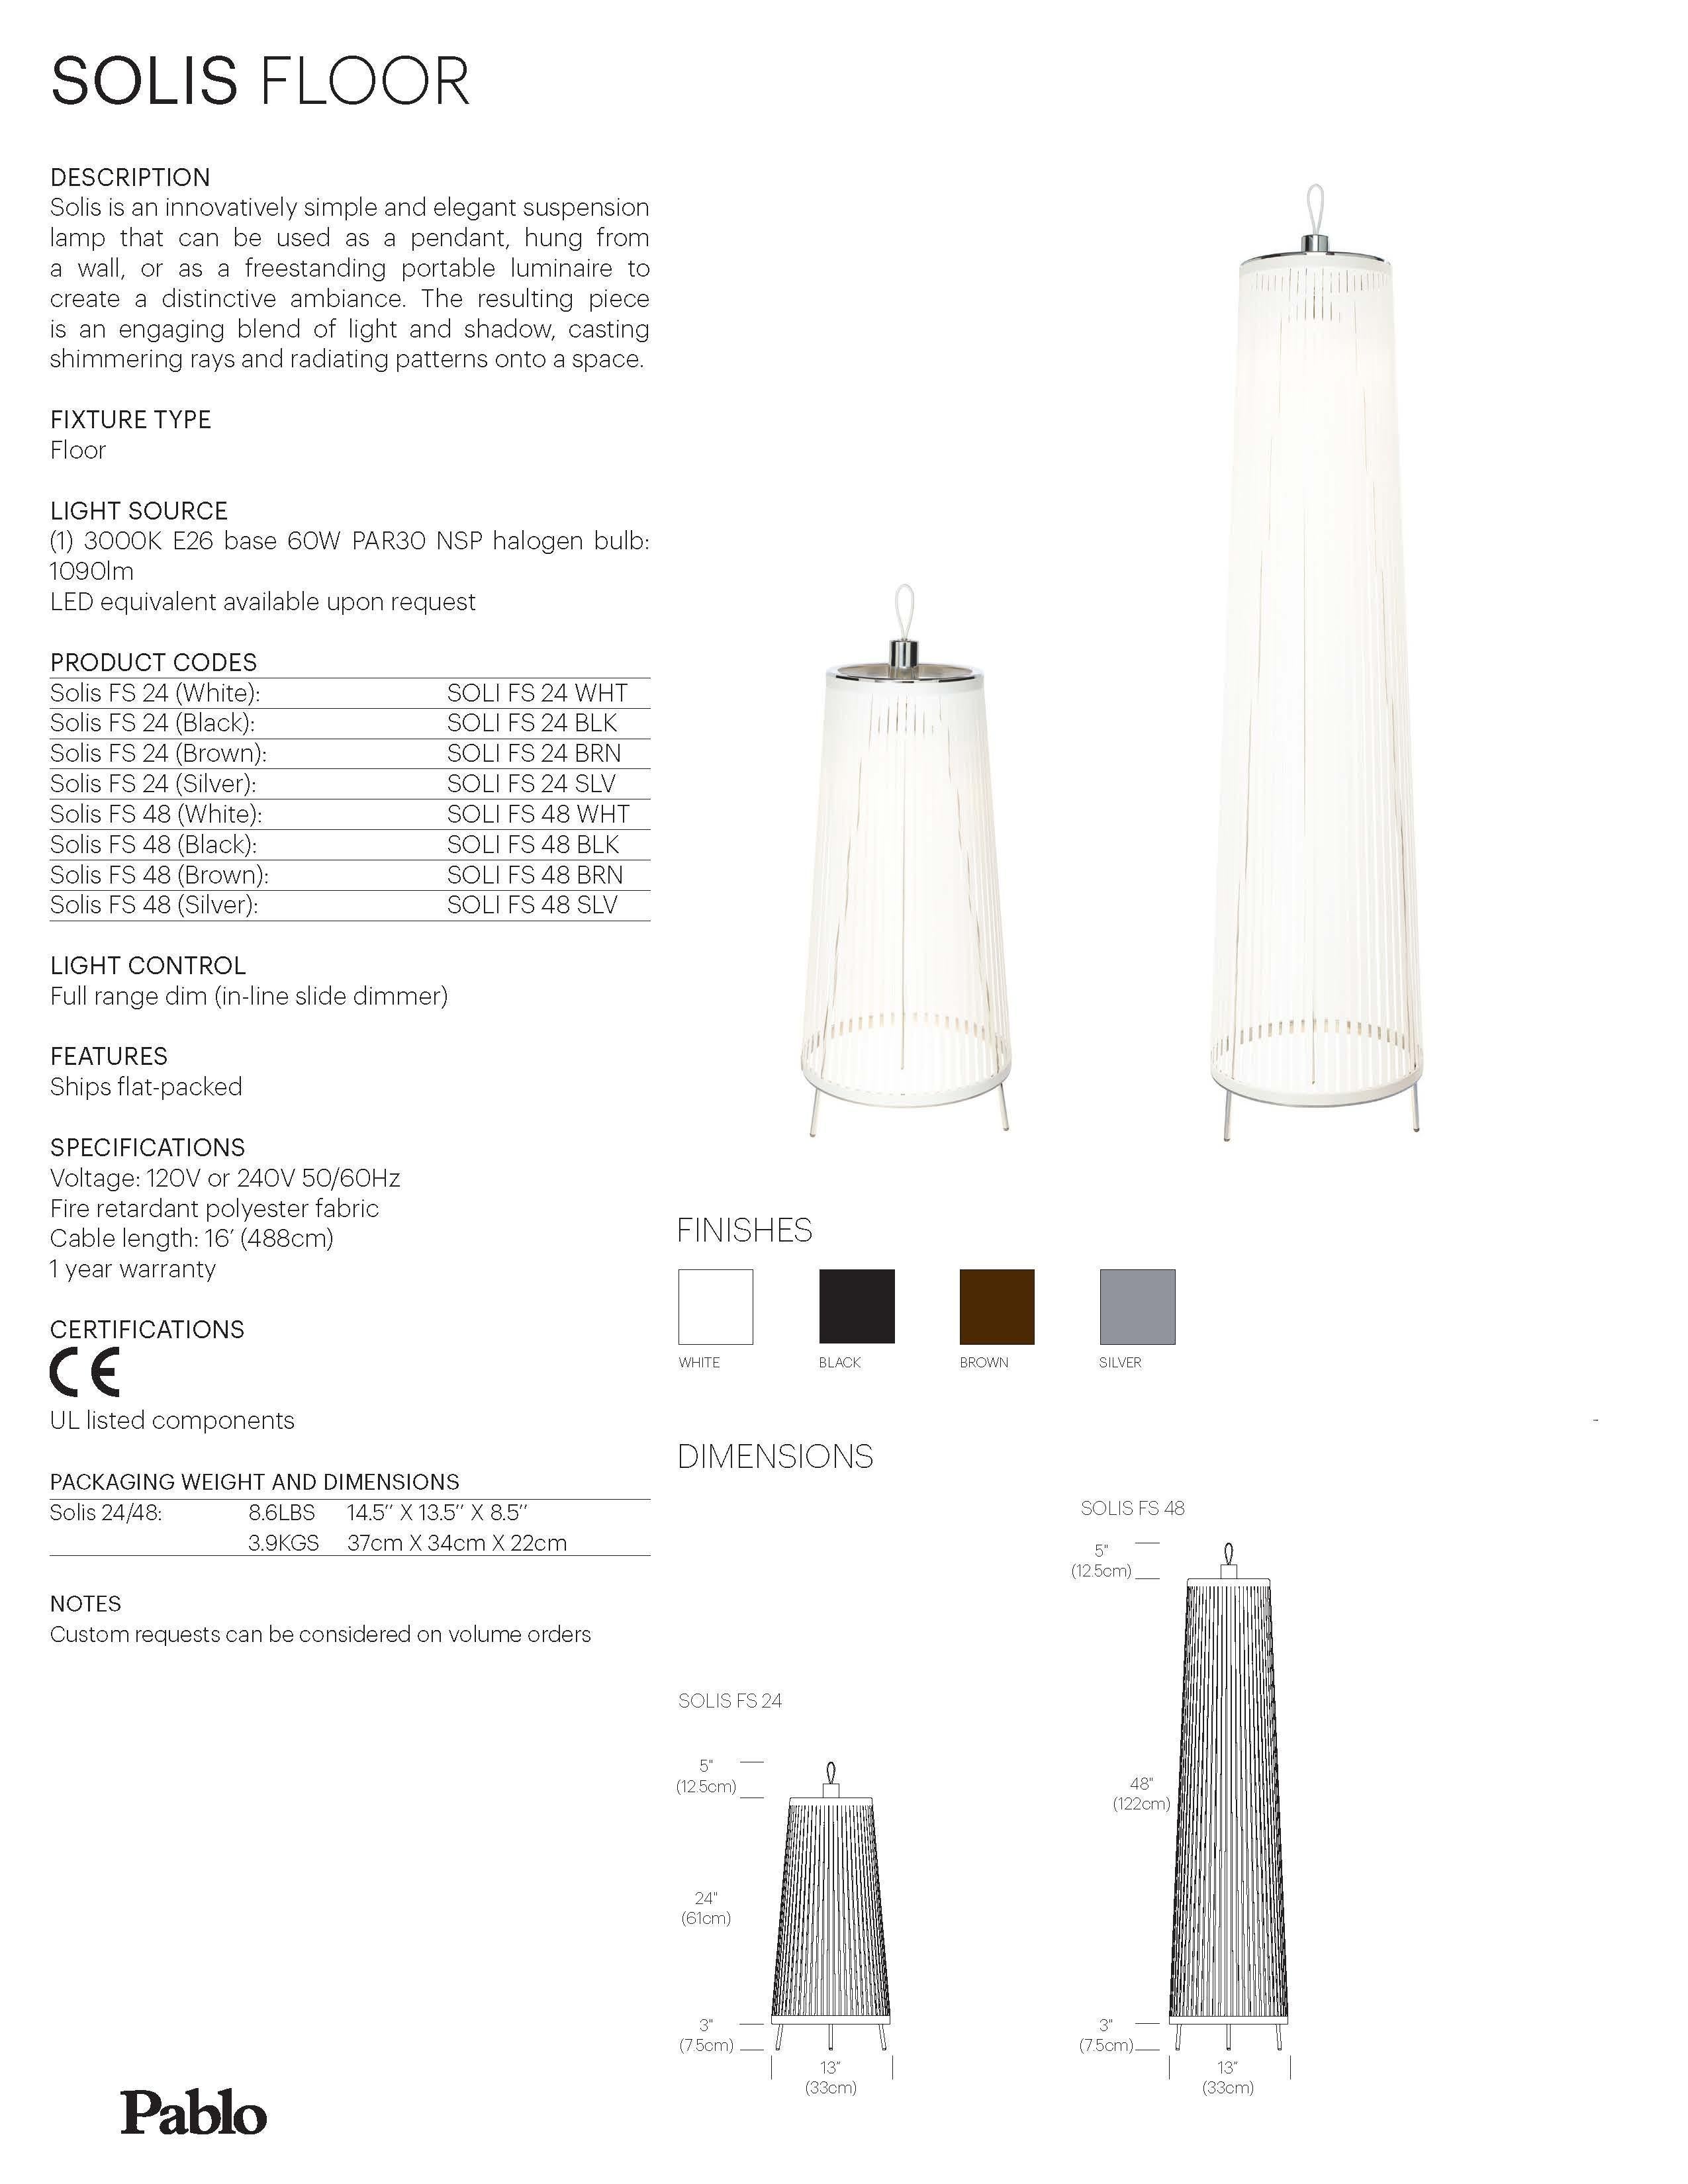 American Solis 24 Freestanding Lamp in Brown by Pablo Designs